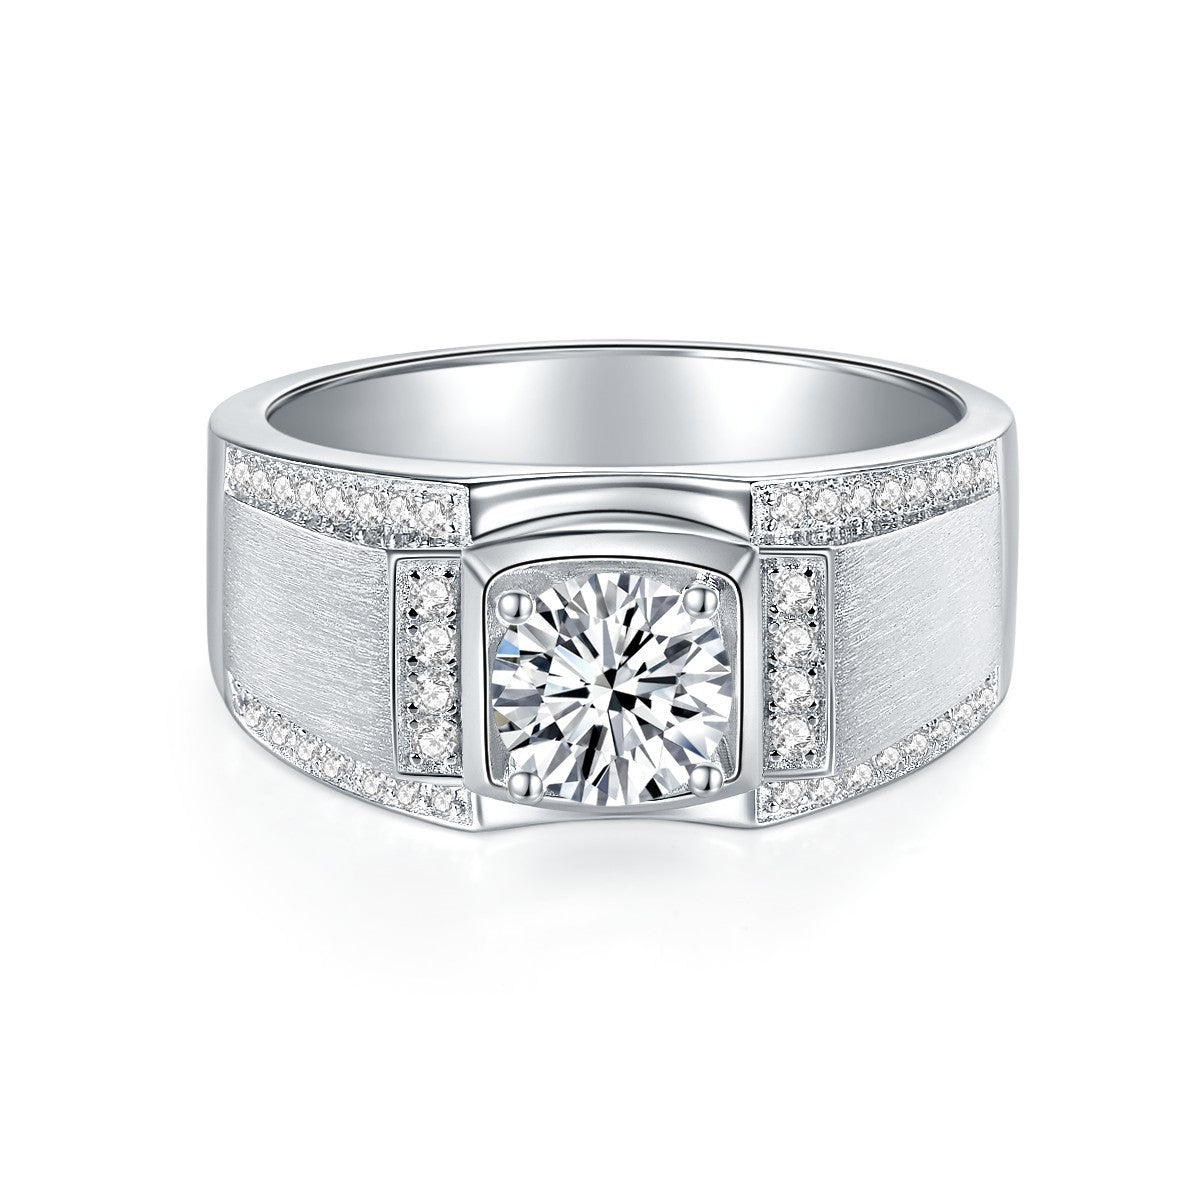 Moissanite diamond ring 1 carat silver plated 18K white gold brushed men's ring white gold wedding ring couple